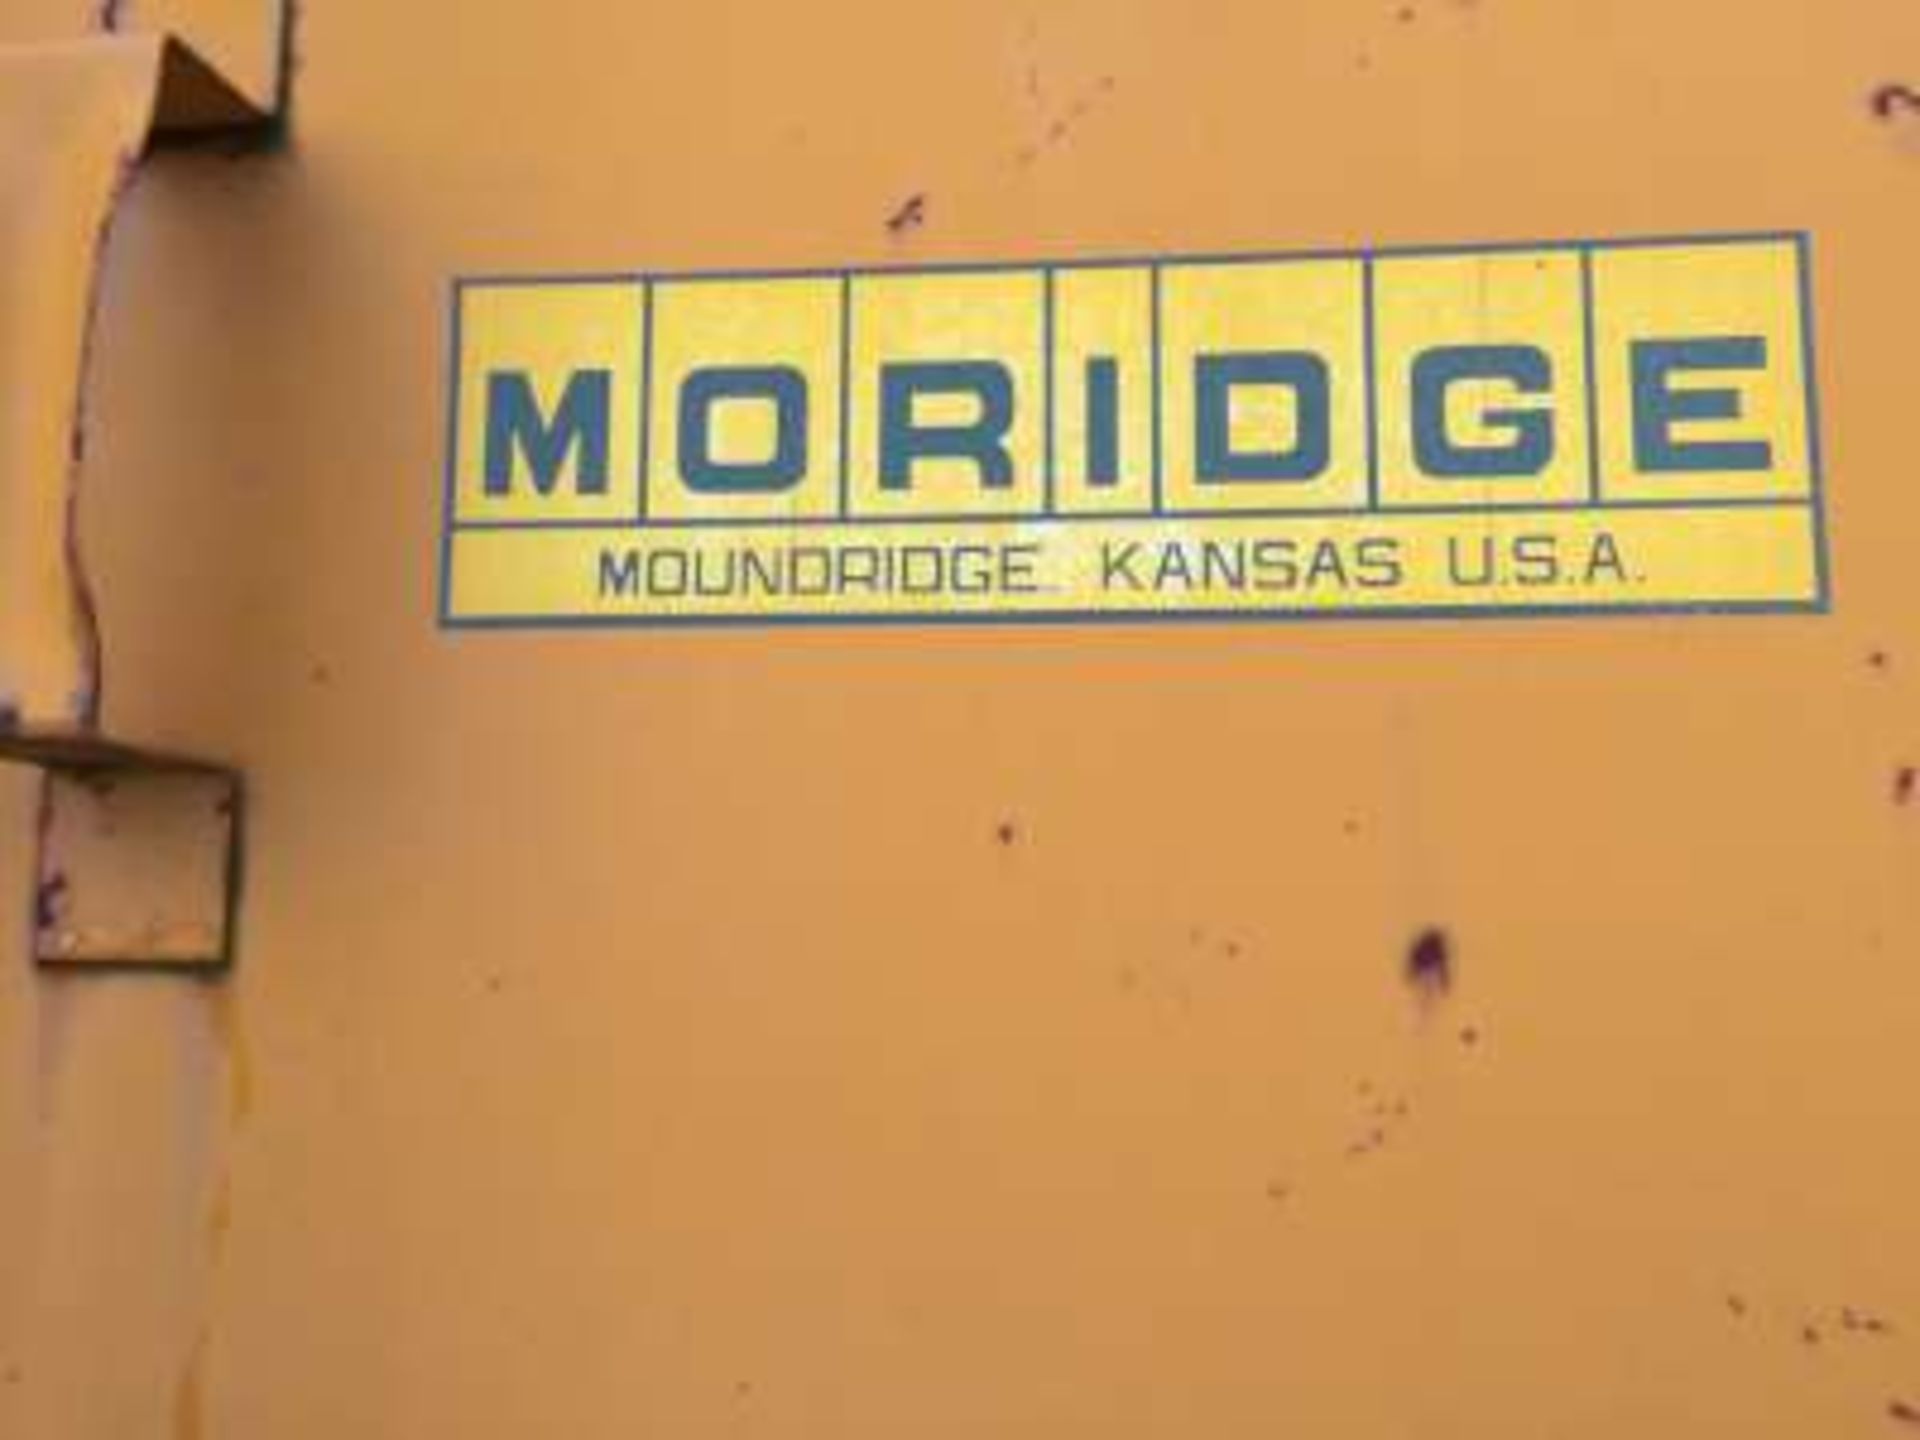 Morridge #400 grain dryer, 400 bushel - Image 2 of 4